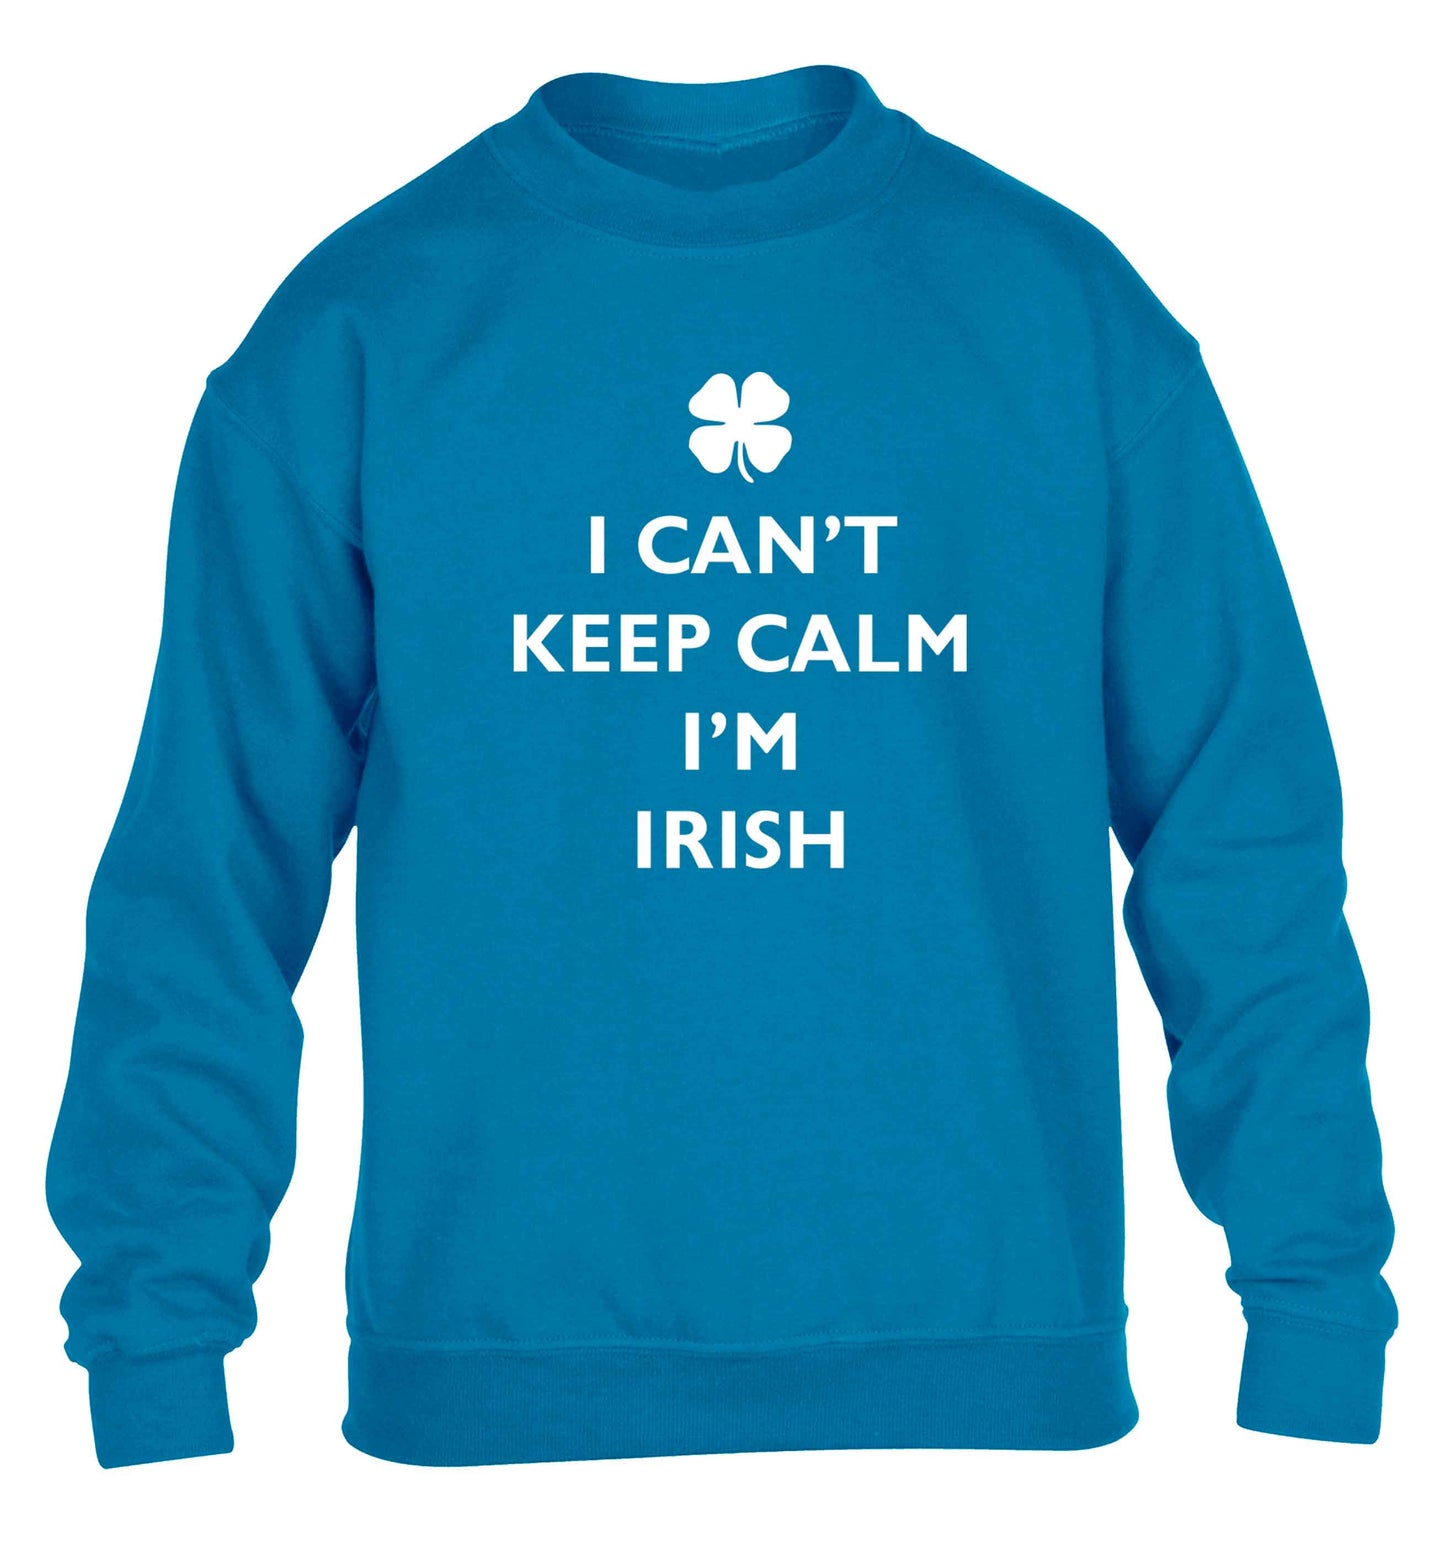 I can't keep calm I'm Irish children's blue sweater 12-13 Years